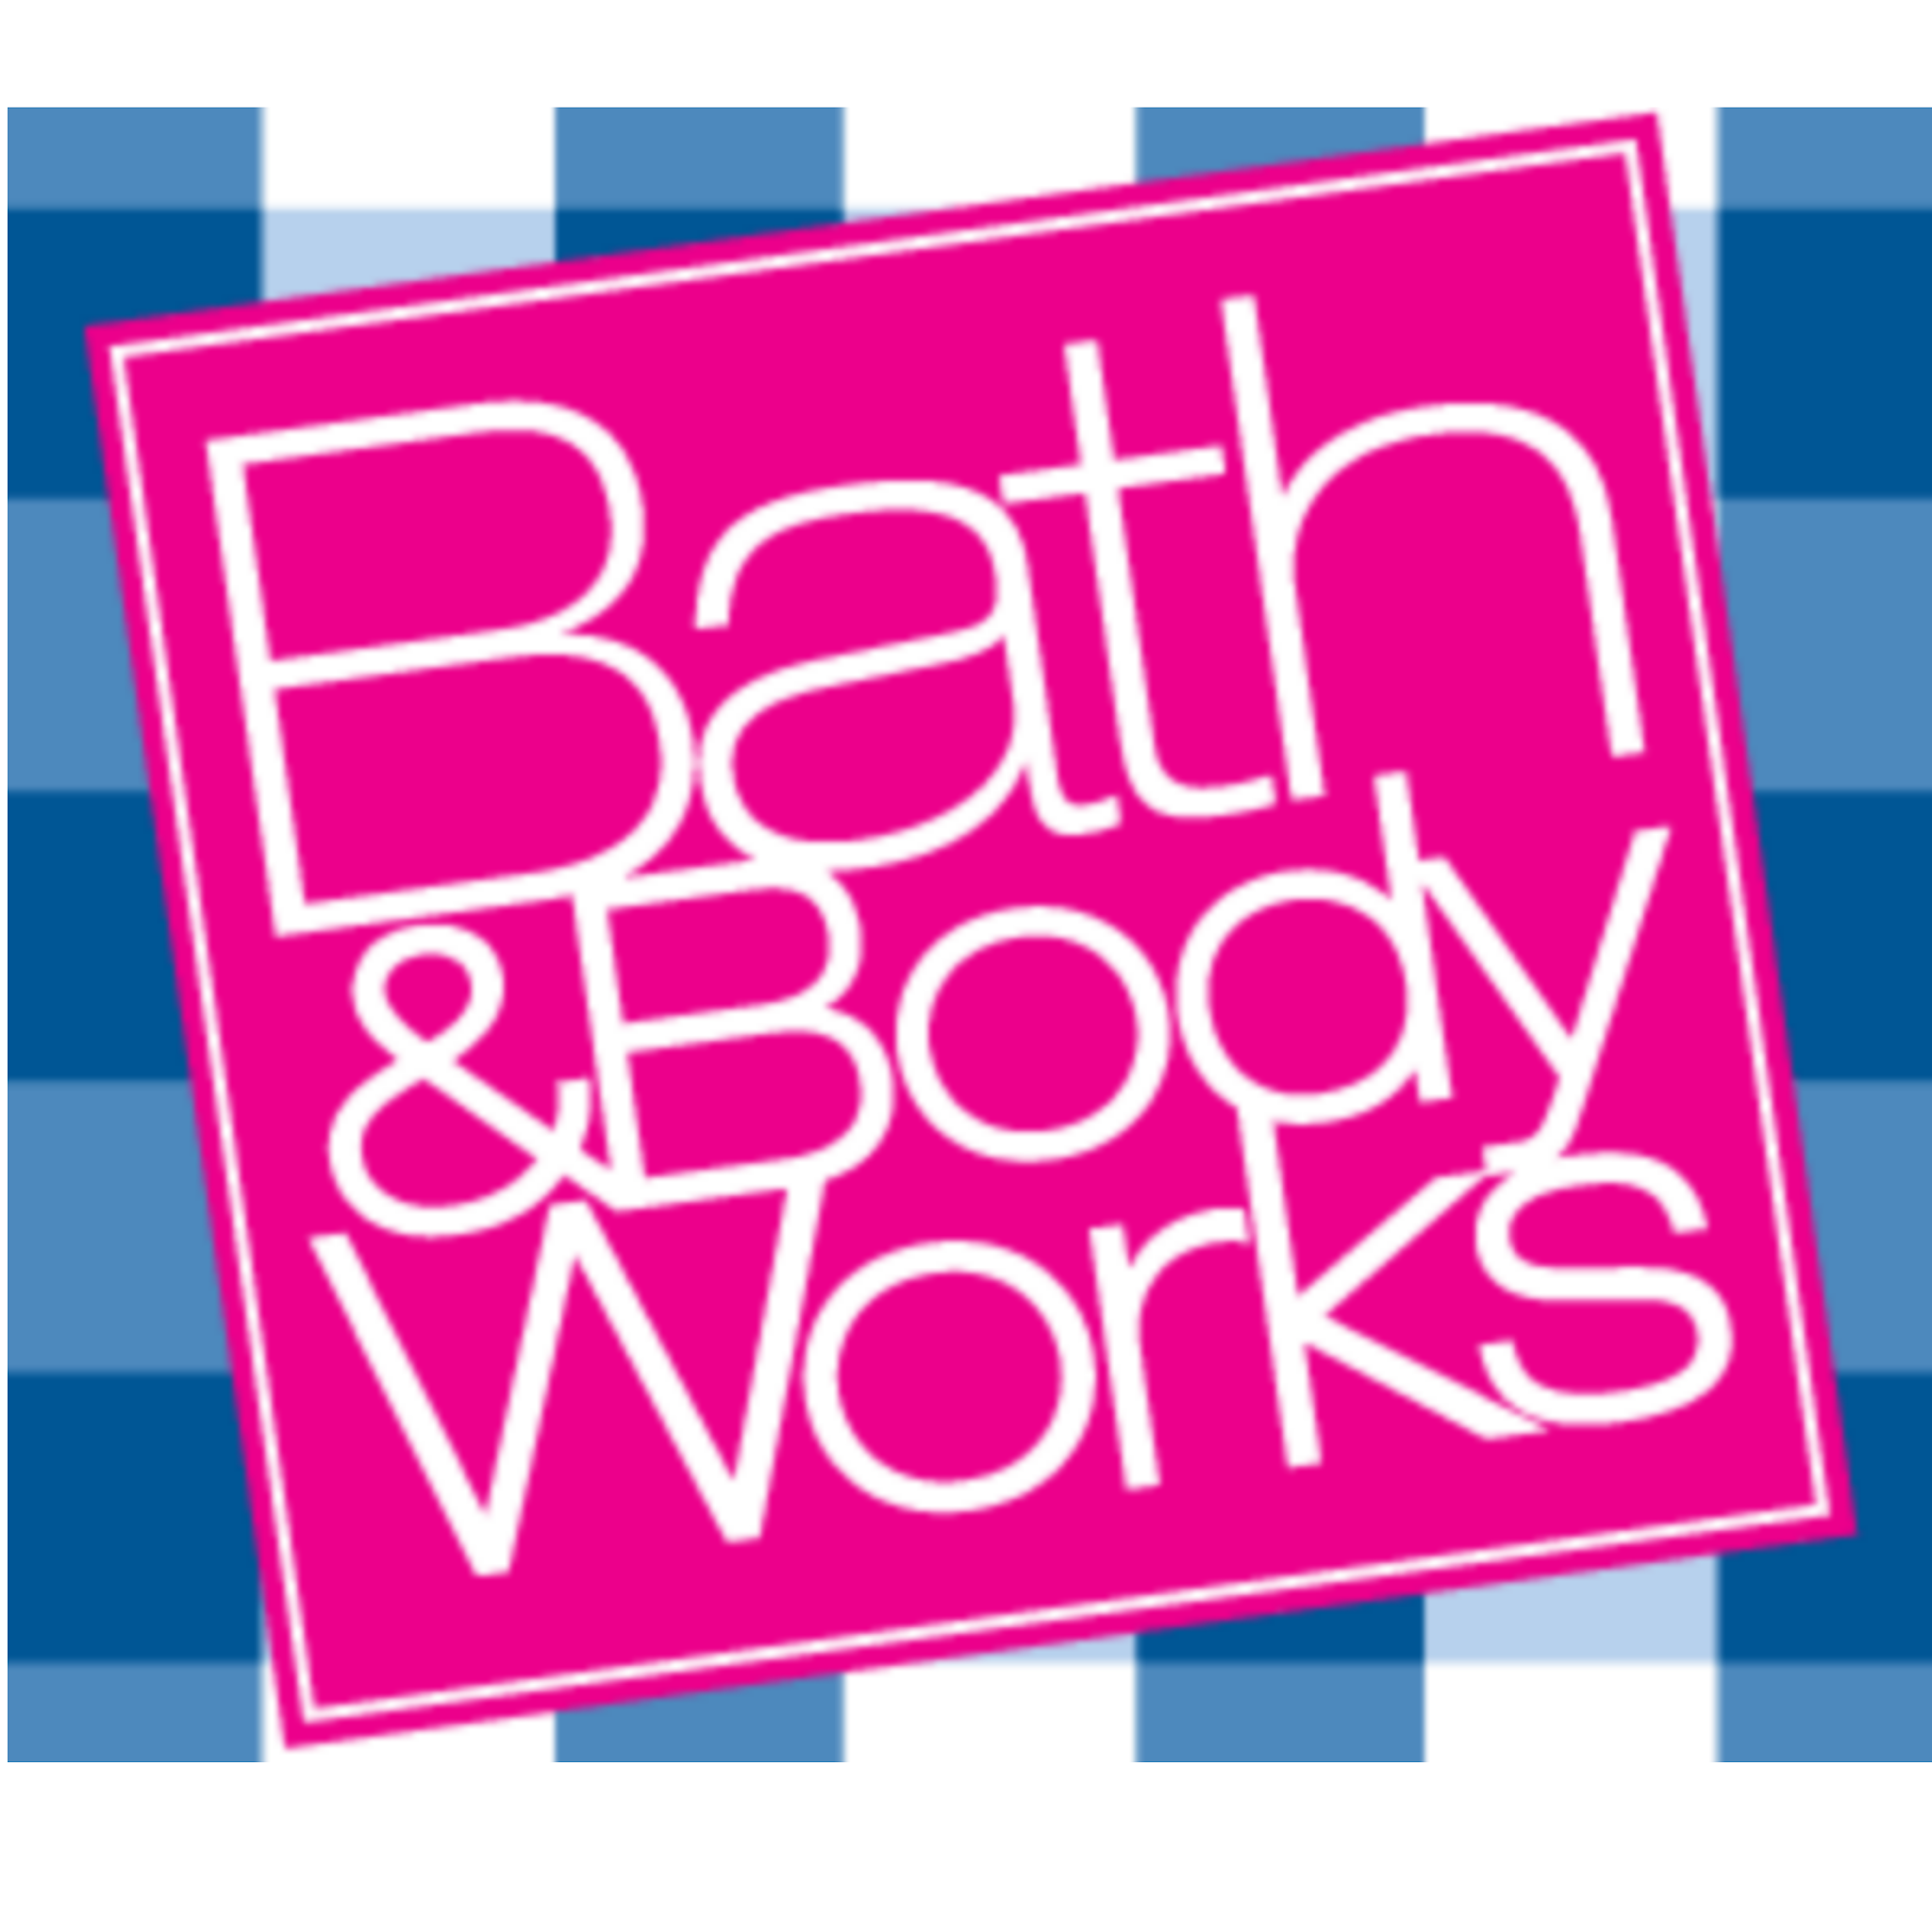 عناوين وأرقام فروع Bath & Body Works |  حمام والجسم